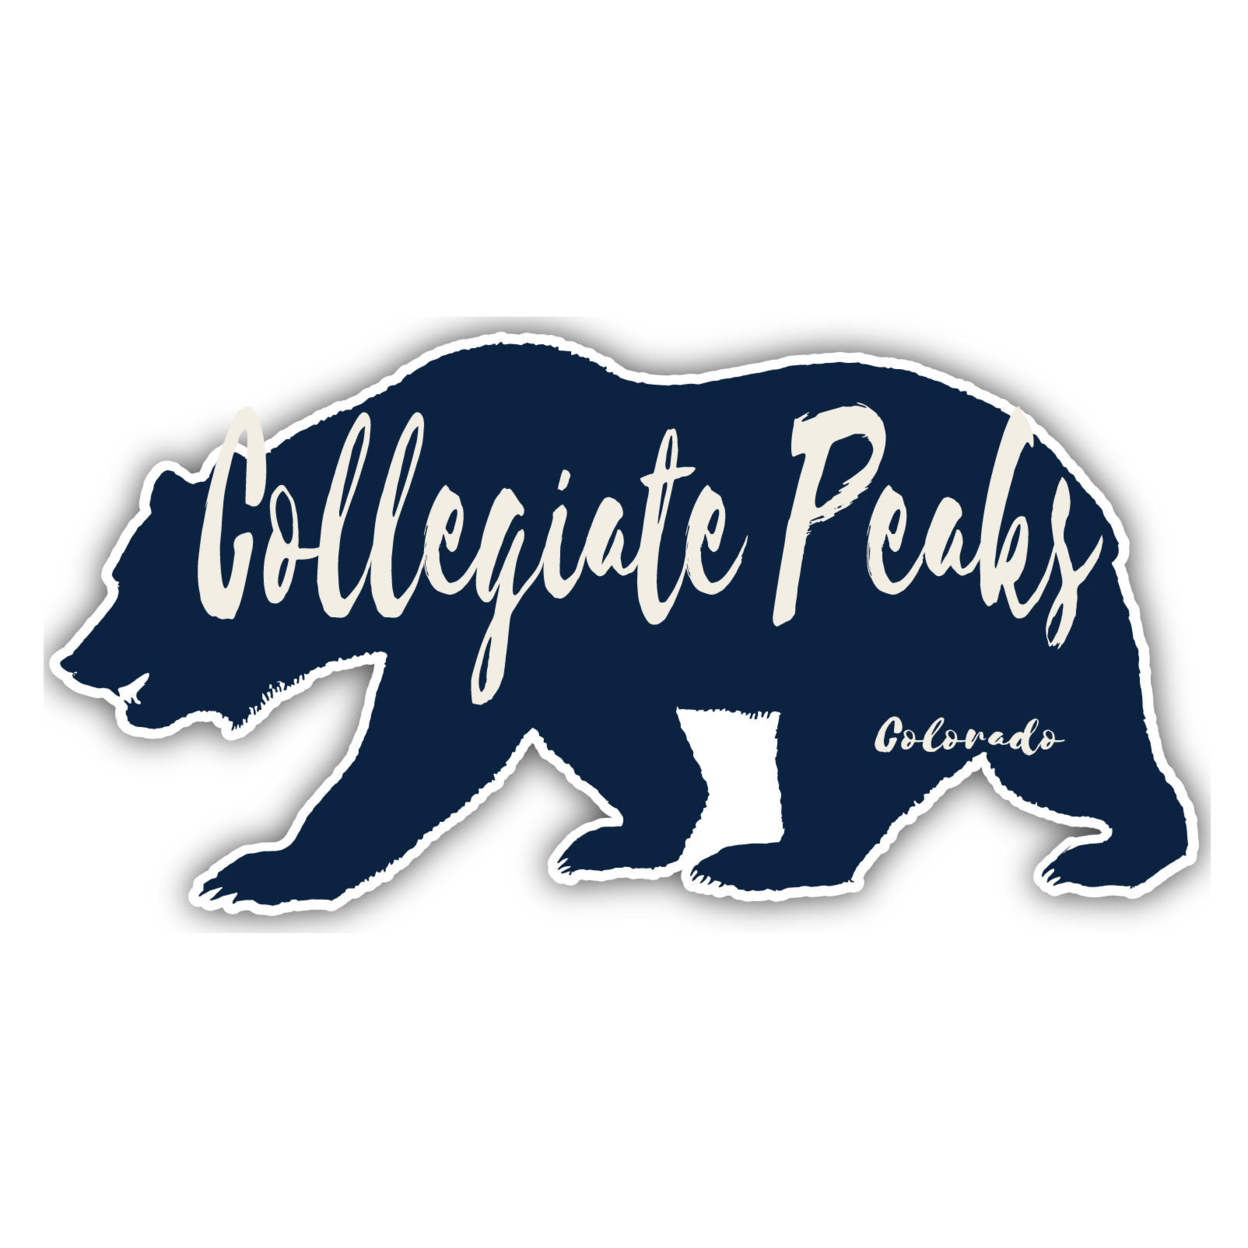 Collegiate Peaks Colorado Souvenir Decorative Stickers (Choose Theme And Size) - Single Unit, 12-Inch, Tent